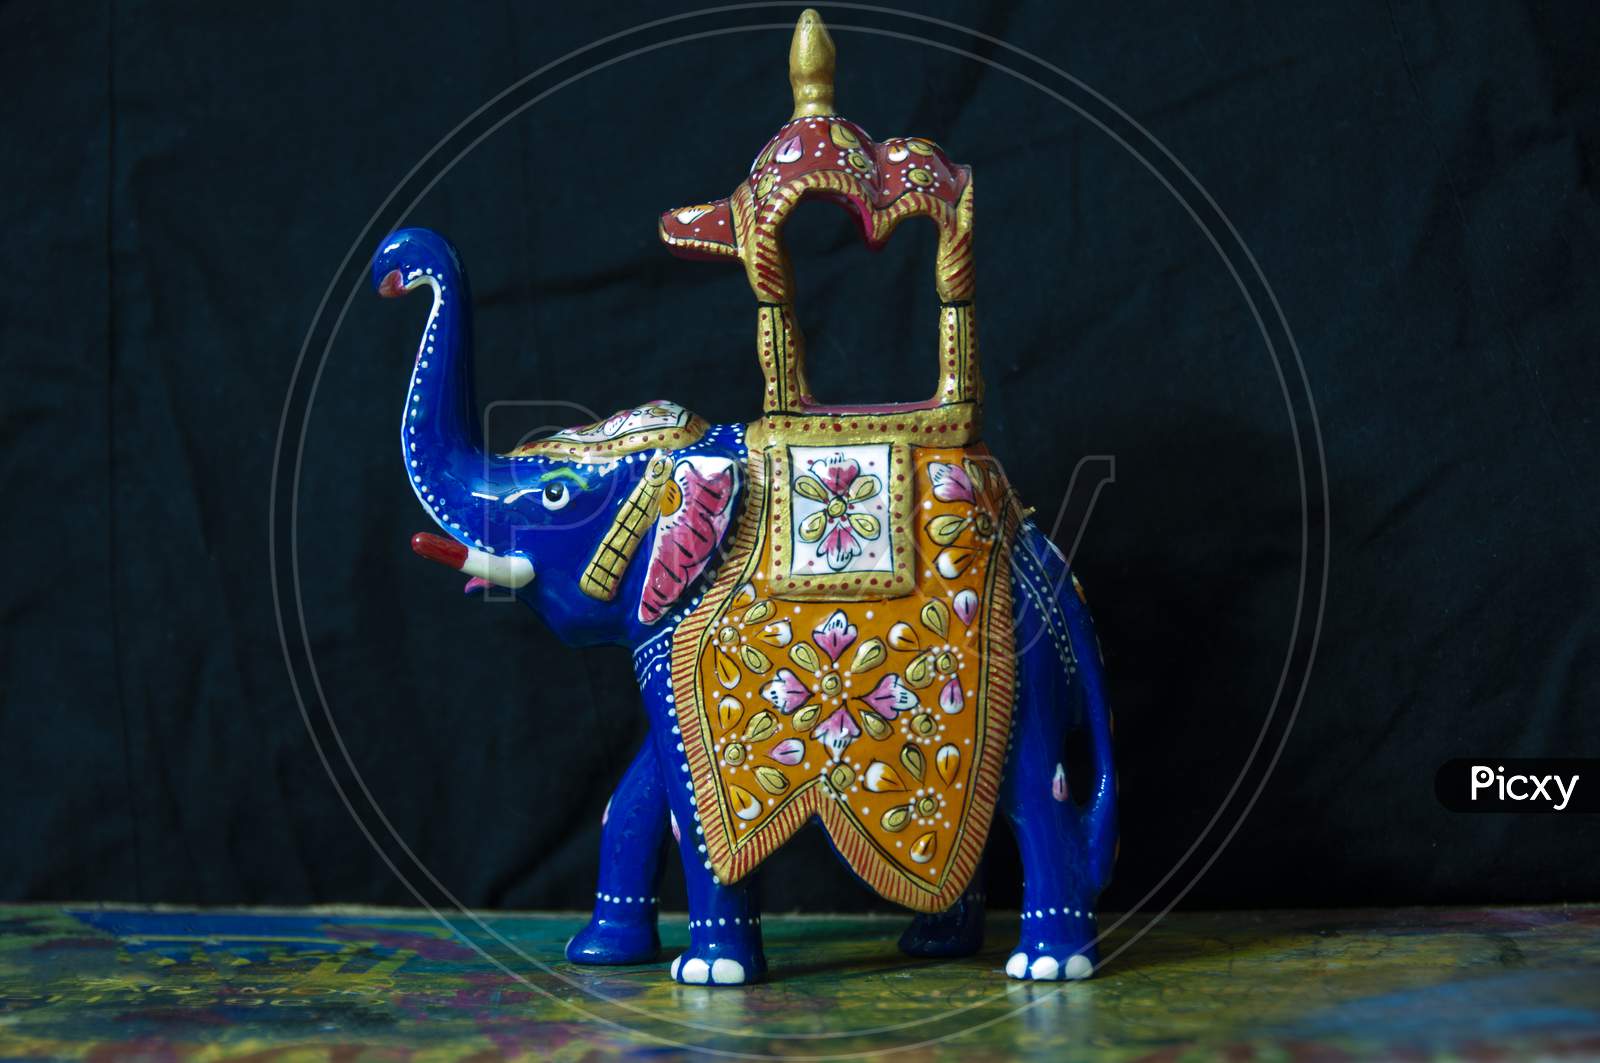 Rajasthani Handicrafts Hand Made Heavy Work Ambabari Elephant Sawari Of King Lucky Charm Multi Color With Clean Finish